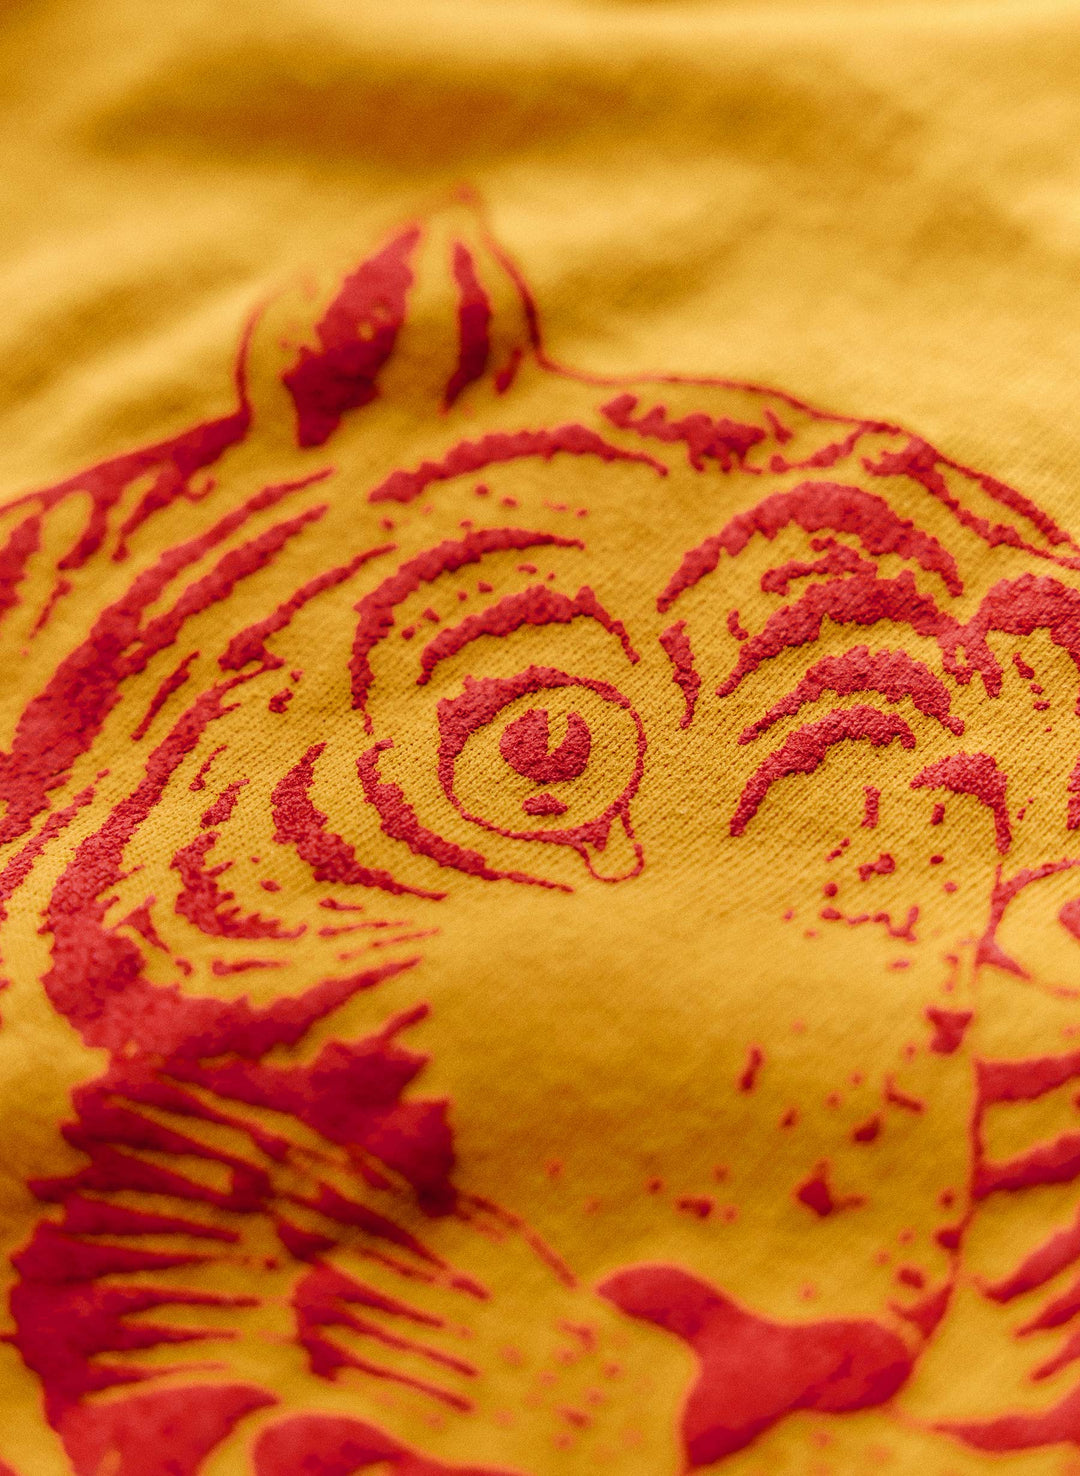 a close up of a tiger face